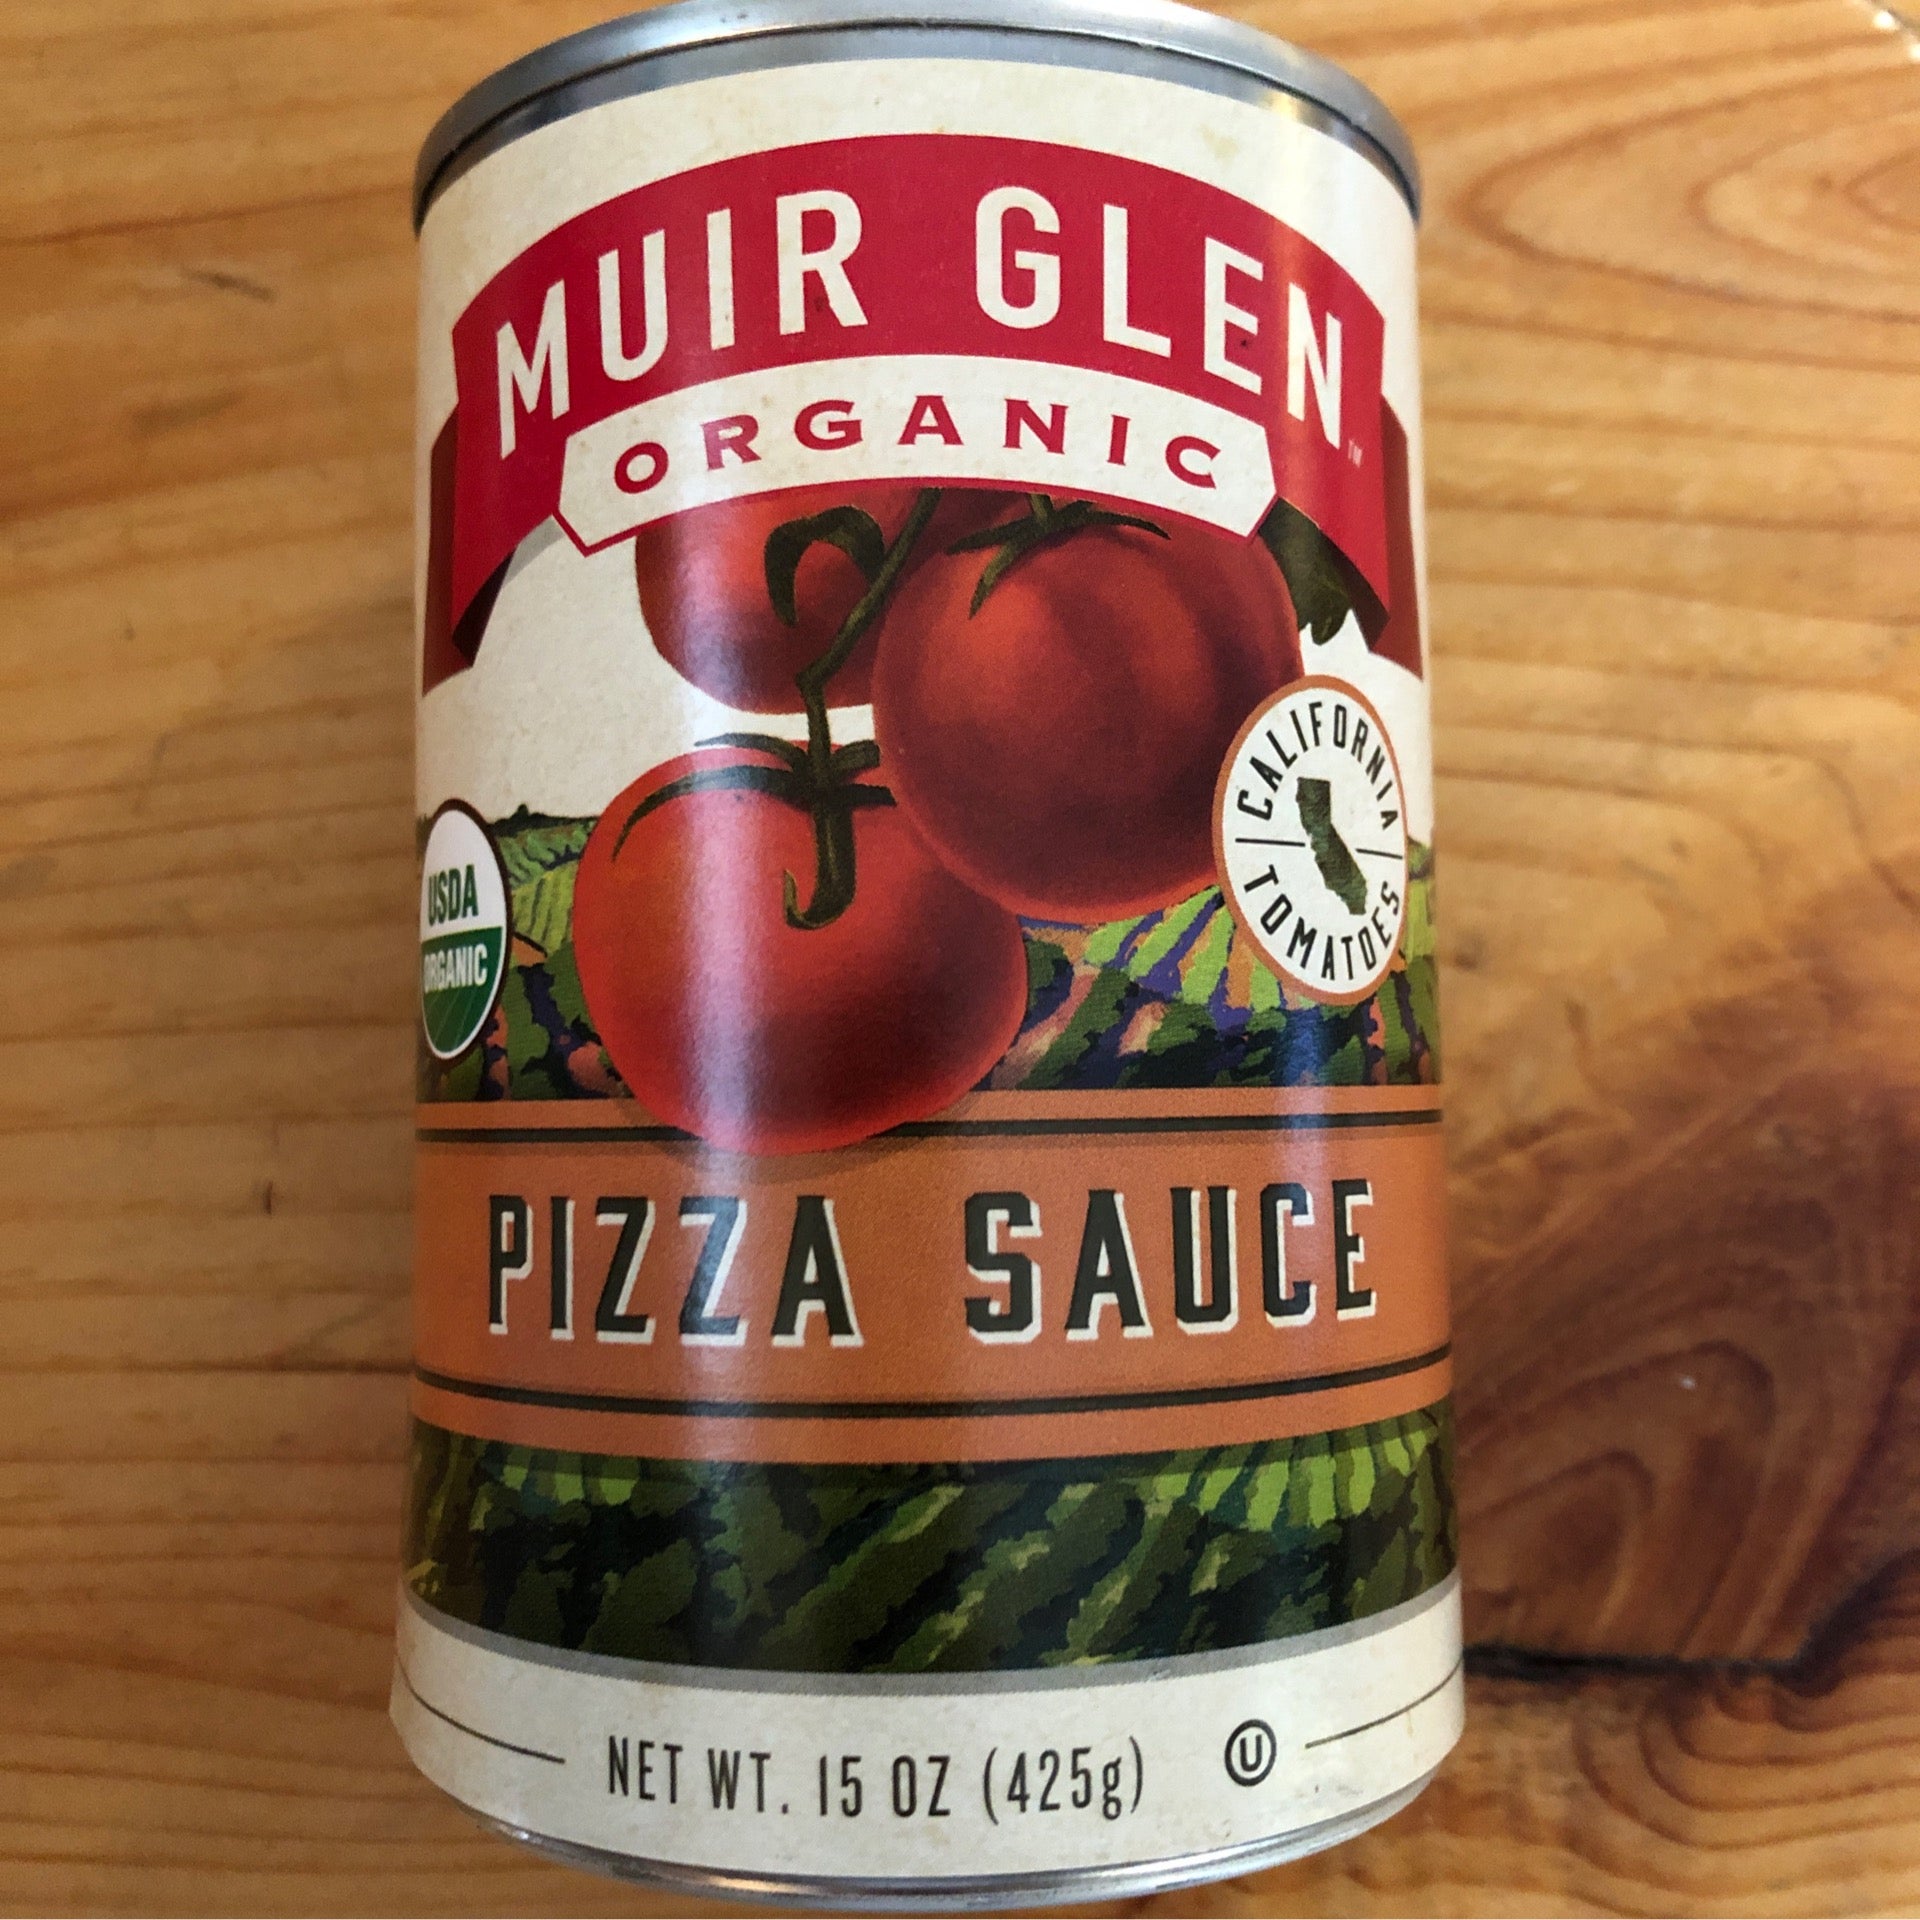 Muir Glen Organic Pizza Sauce, 15 oz. 